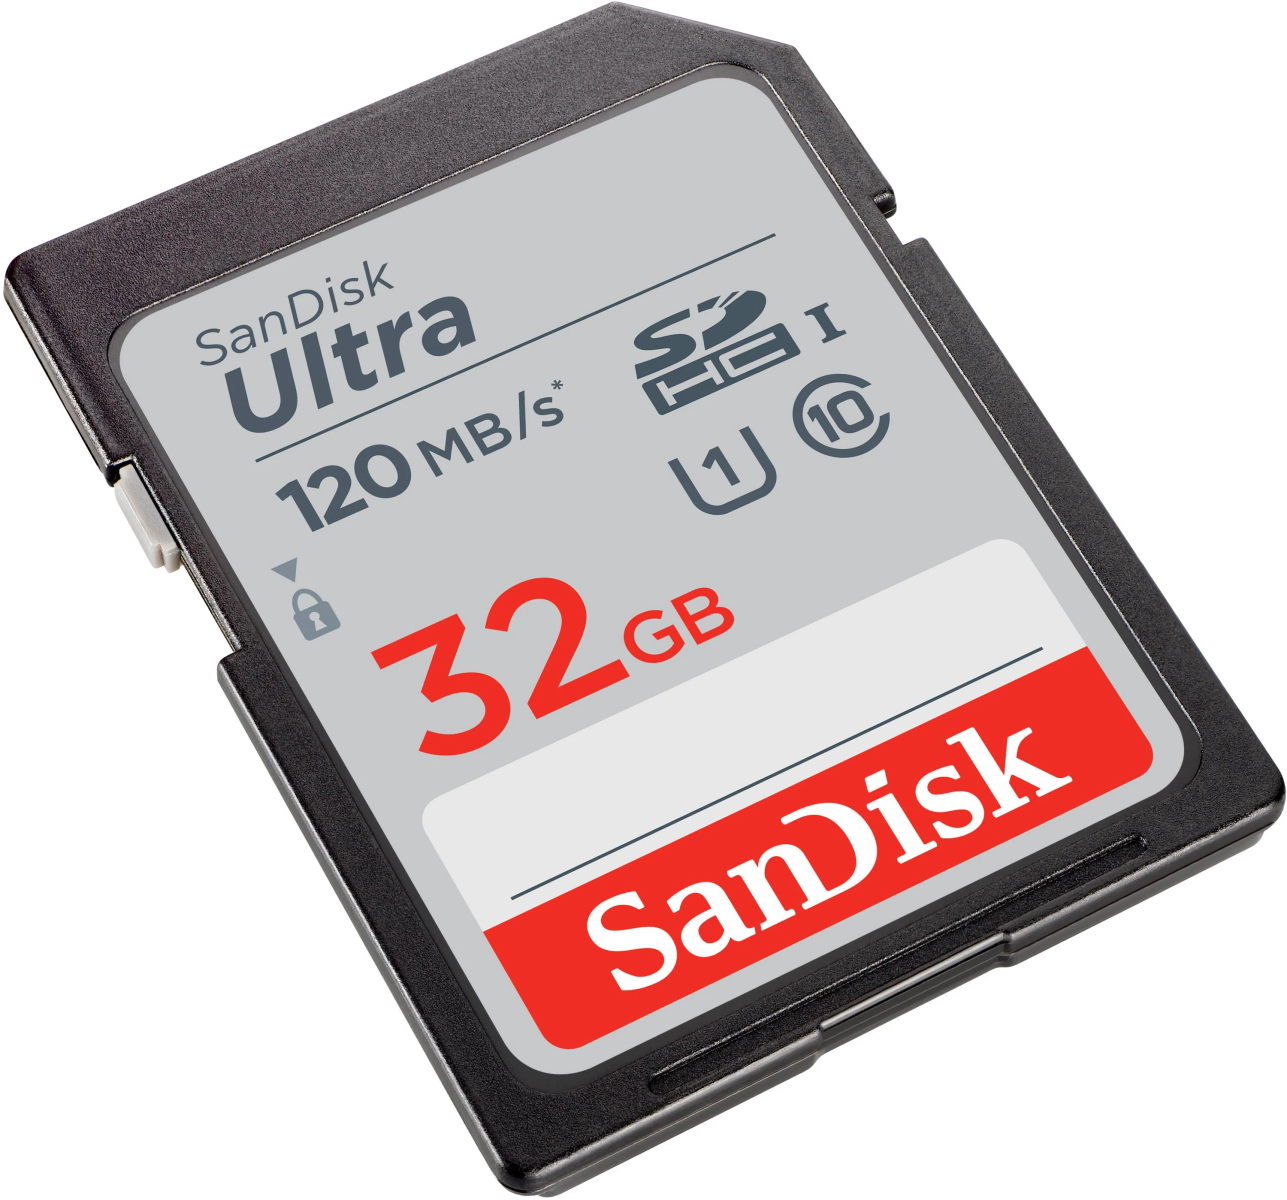 120 Ultra, 32 MB/s GB, Speicherkarte, SDXC SANDISK